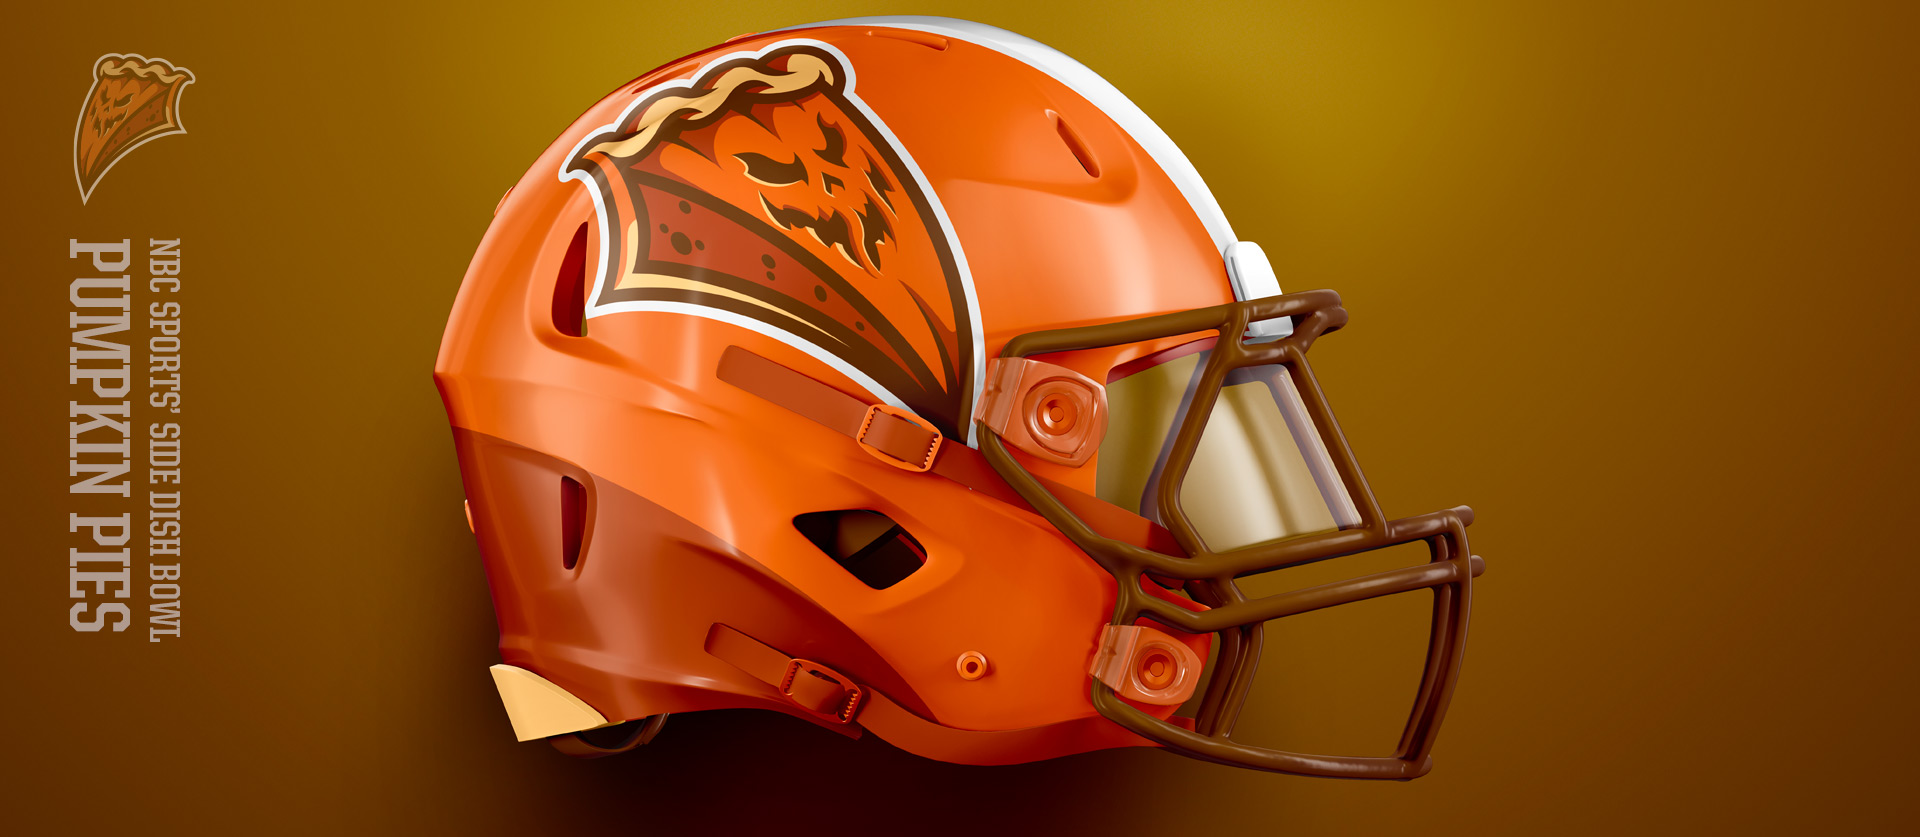 Pumpkin Pies Helmet Side View - Football Uniform Design for NBC Sports Thanksgiving Side Dish Bowl